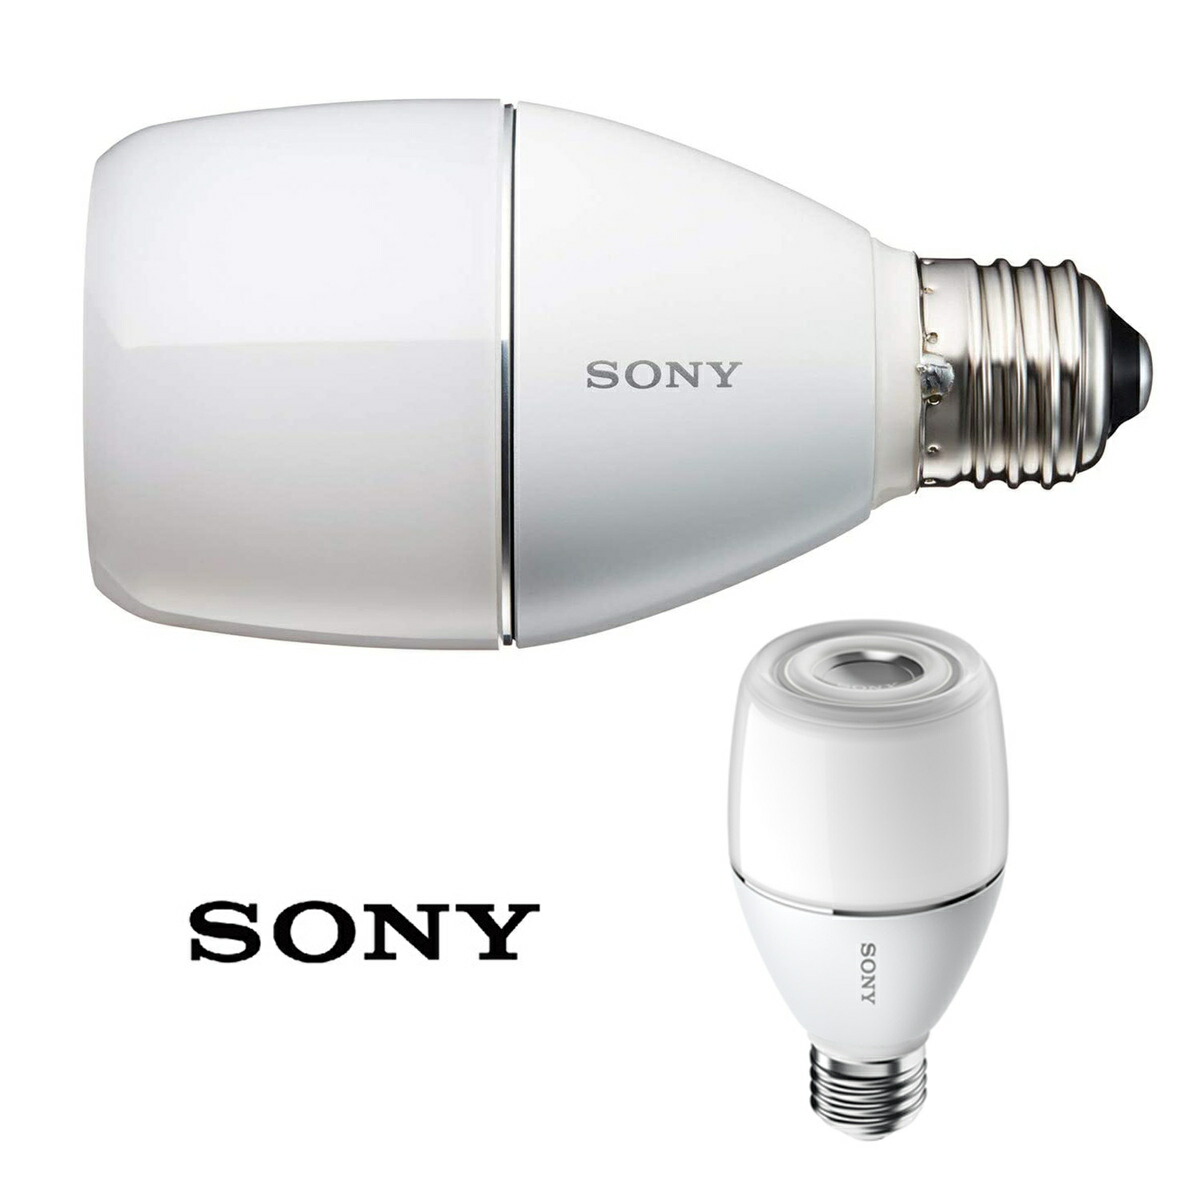 SALE新作登場 SONY LED電球スピーカー LST-SE300 XktpC-m31662374028